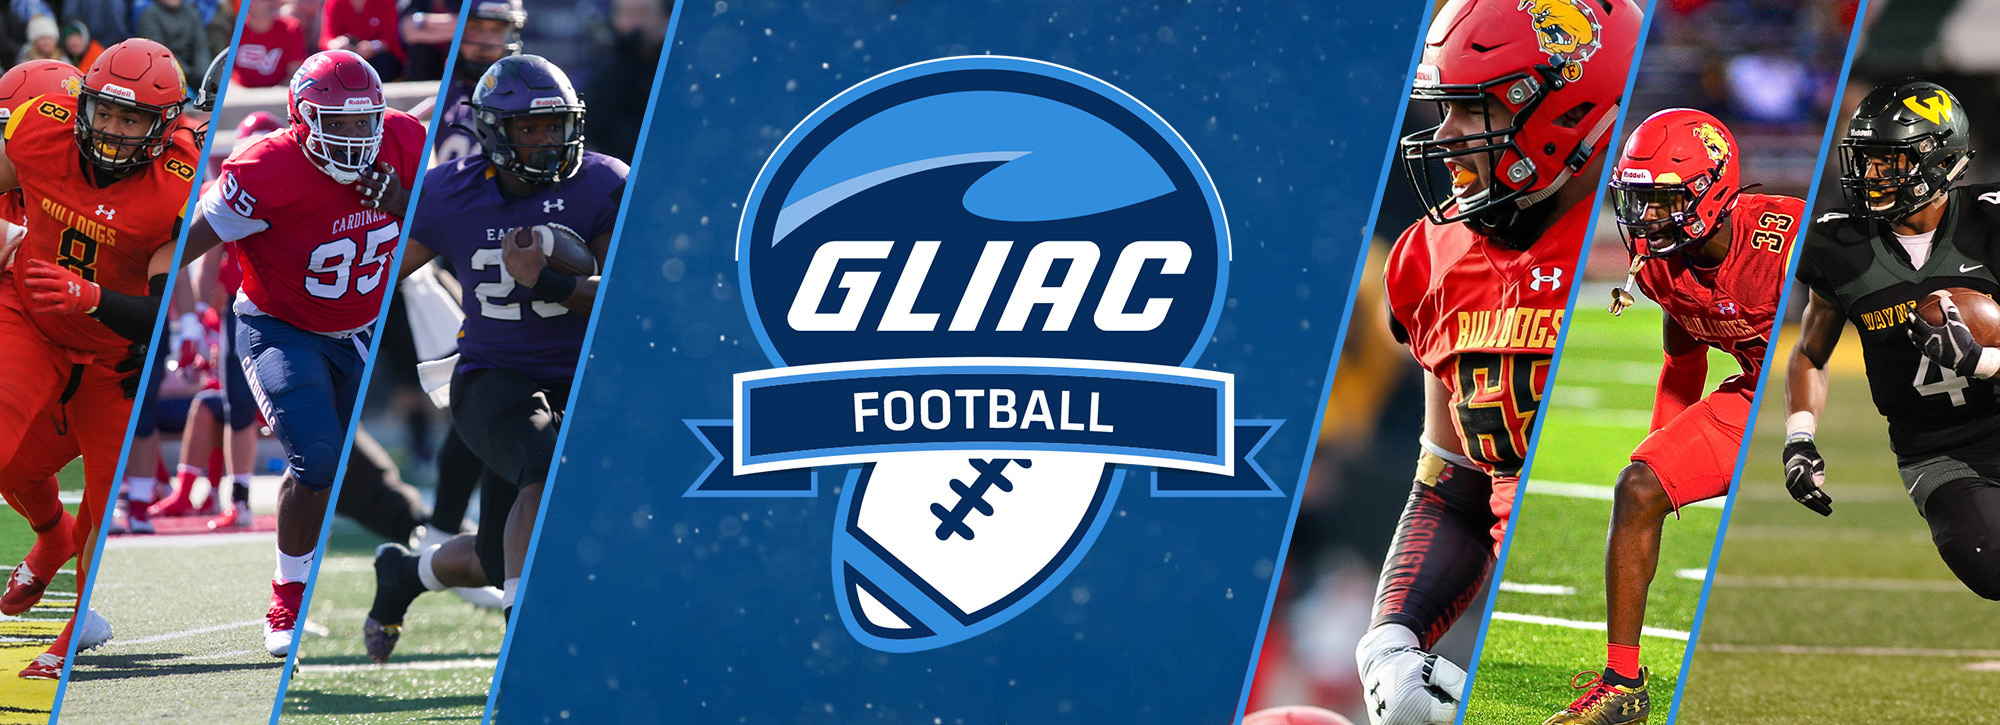 2019 All-GLIAC Football Teams, Player of the Year Awards Announced